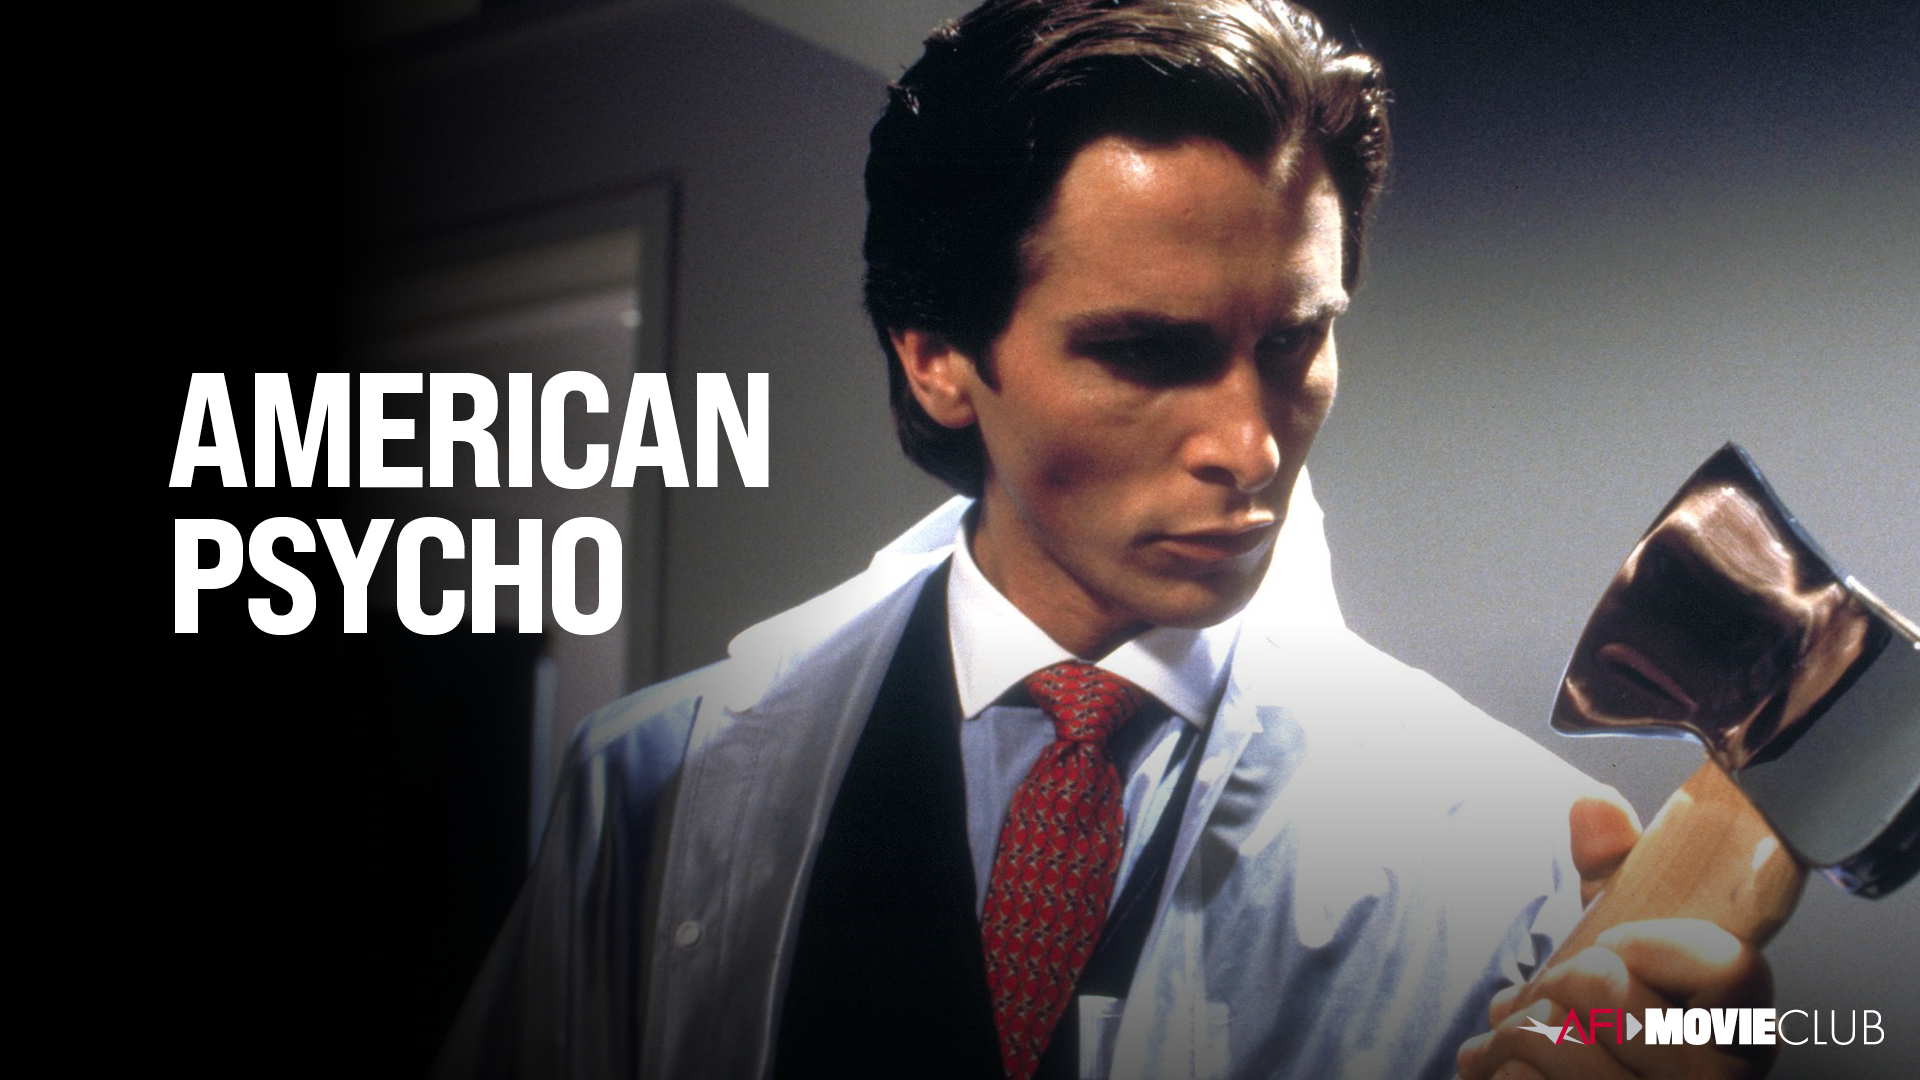 American Psycho Film Still - Christian Bale